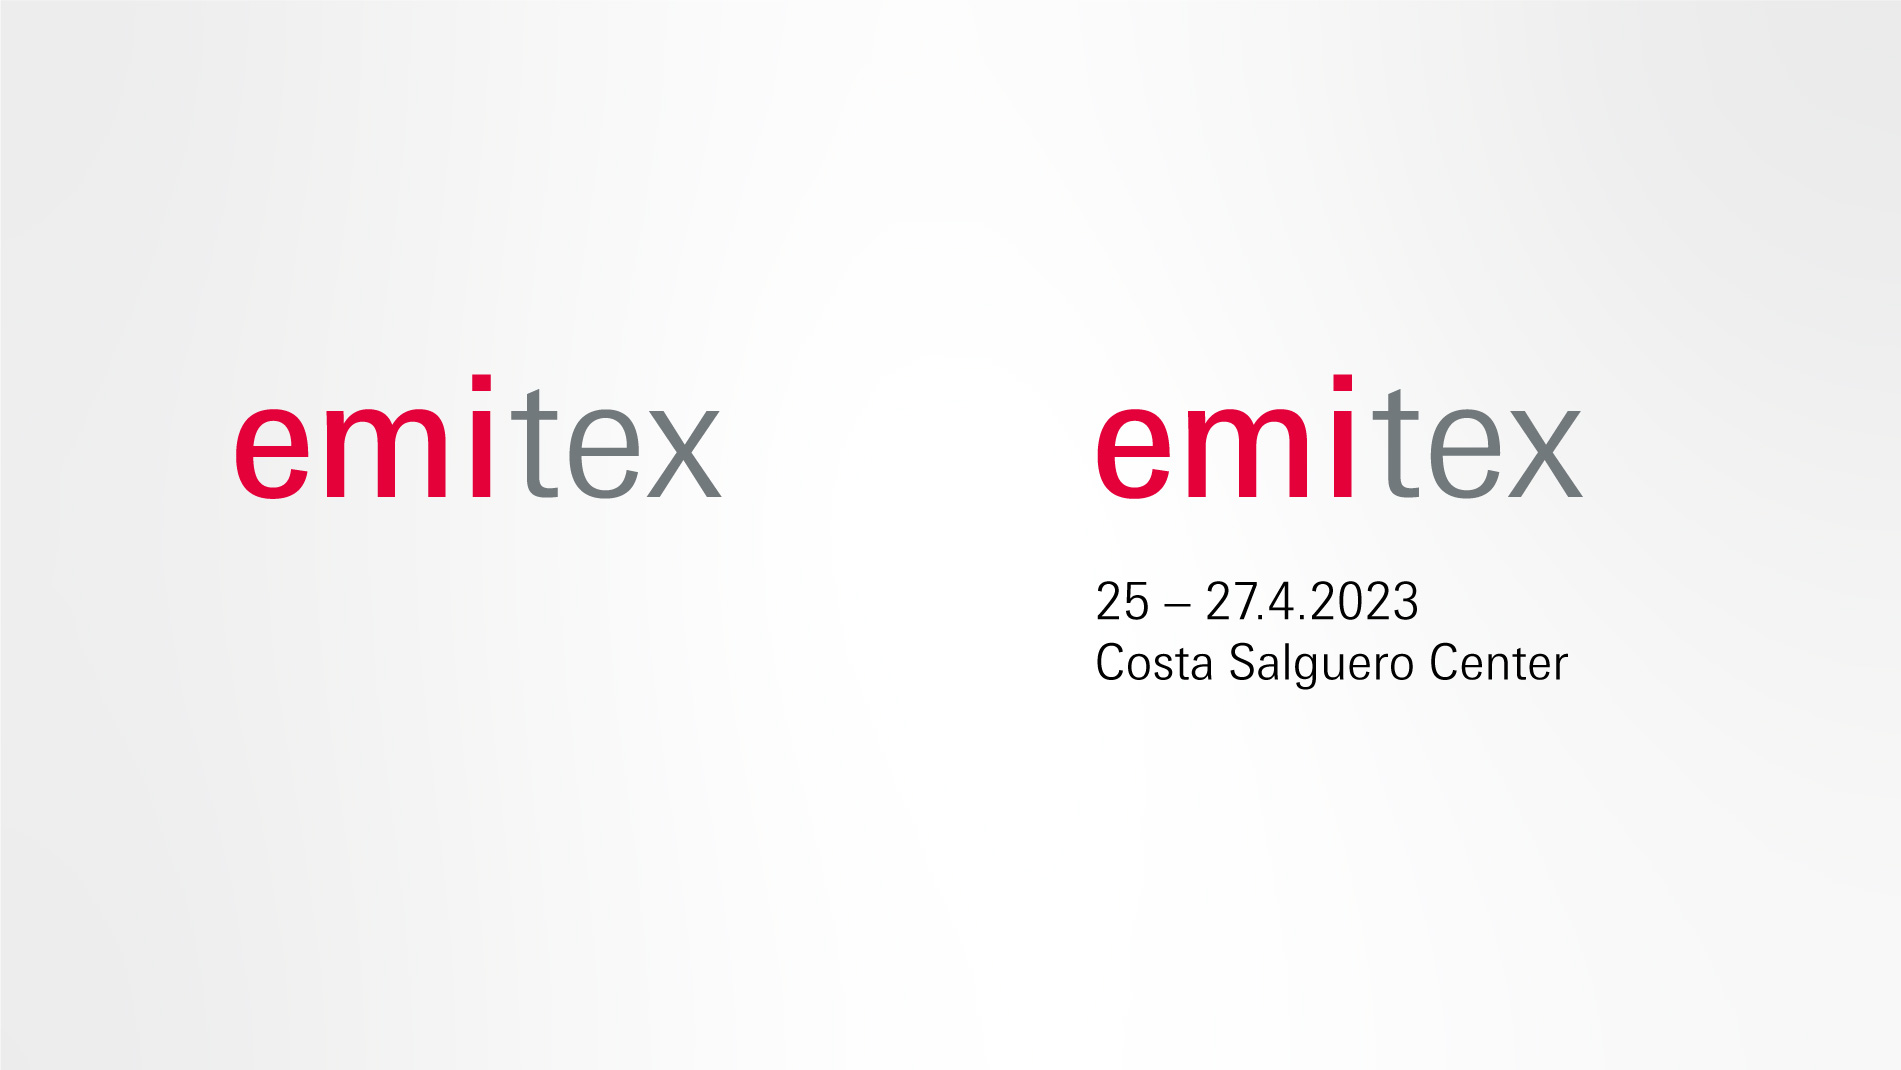 Emitex: Event logo